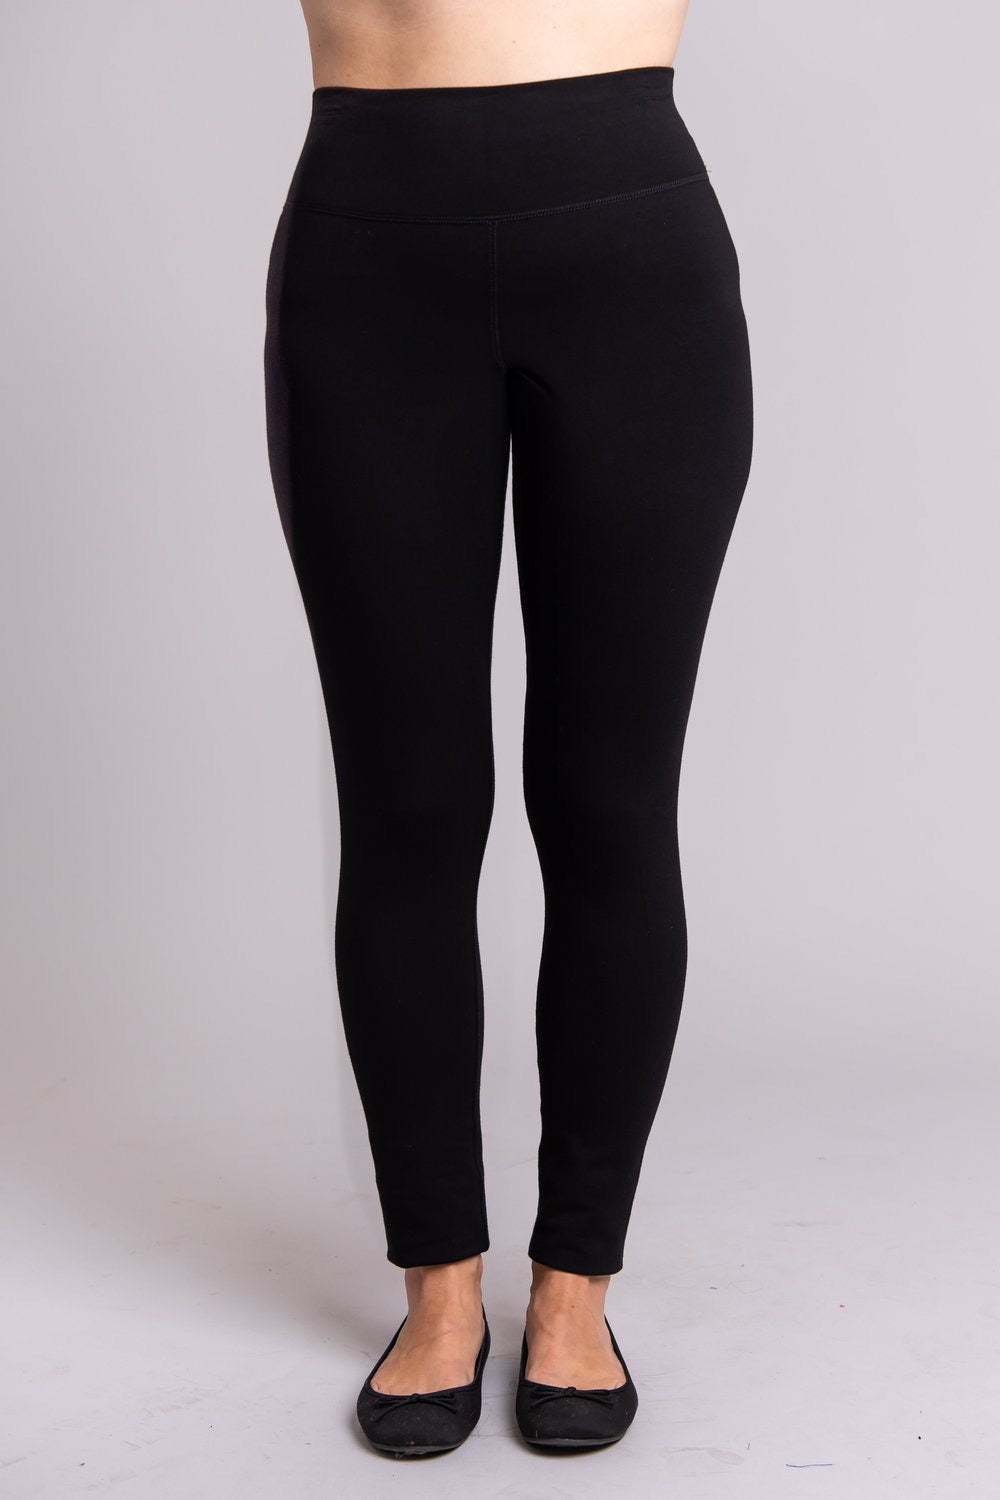 zuwimk Sweatpants Women,Women's Plus Size Curvy Fit Gabardine Bootcut Dress  Pants Black,L 